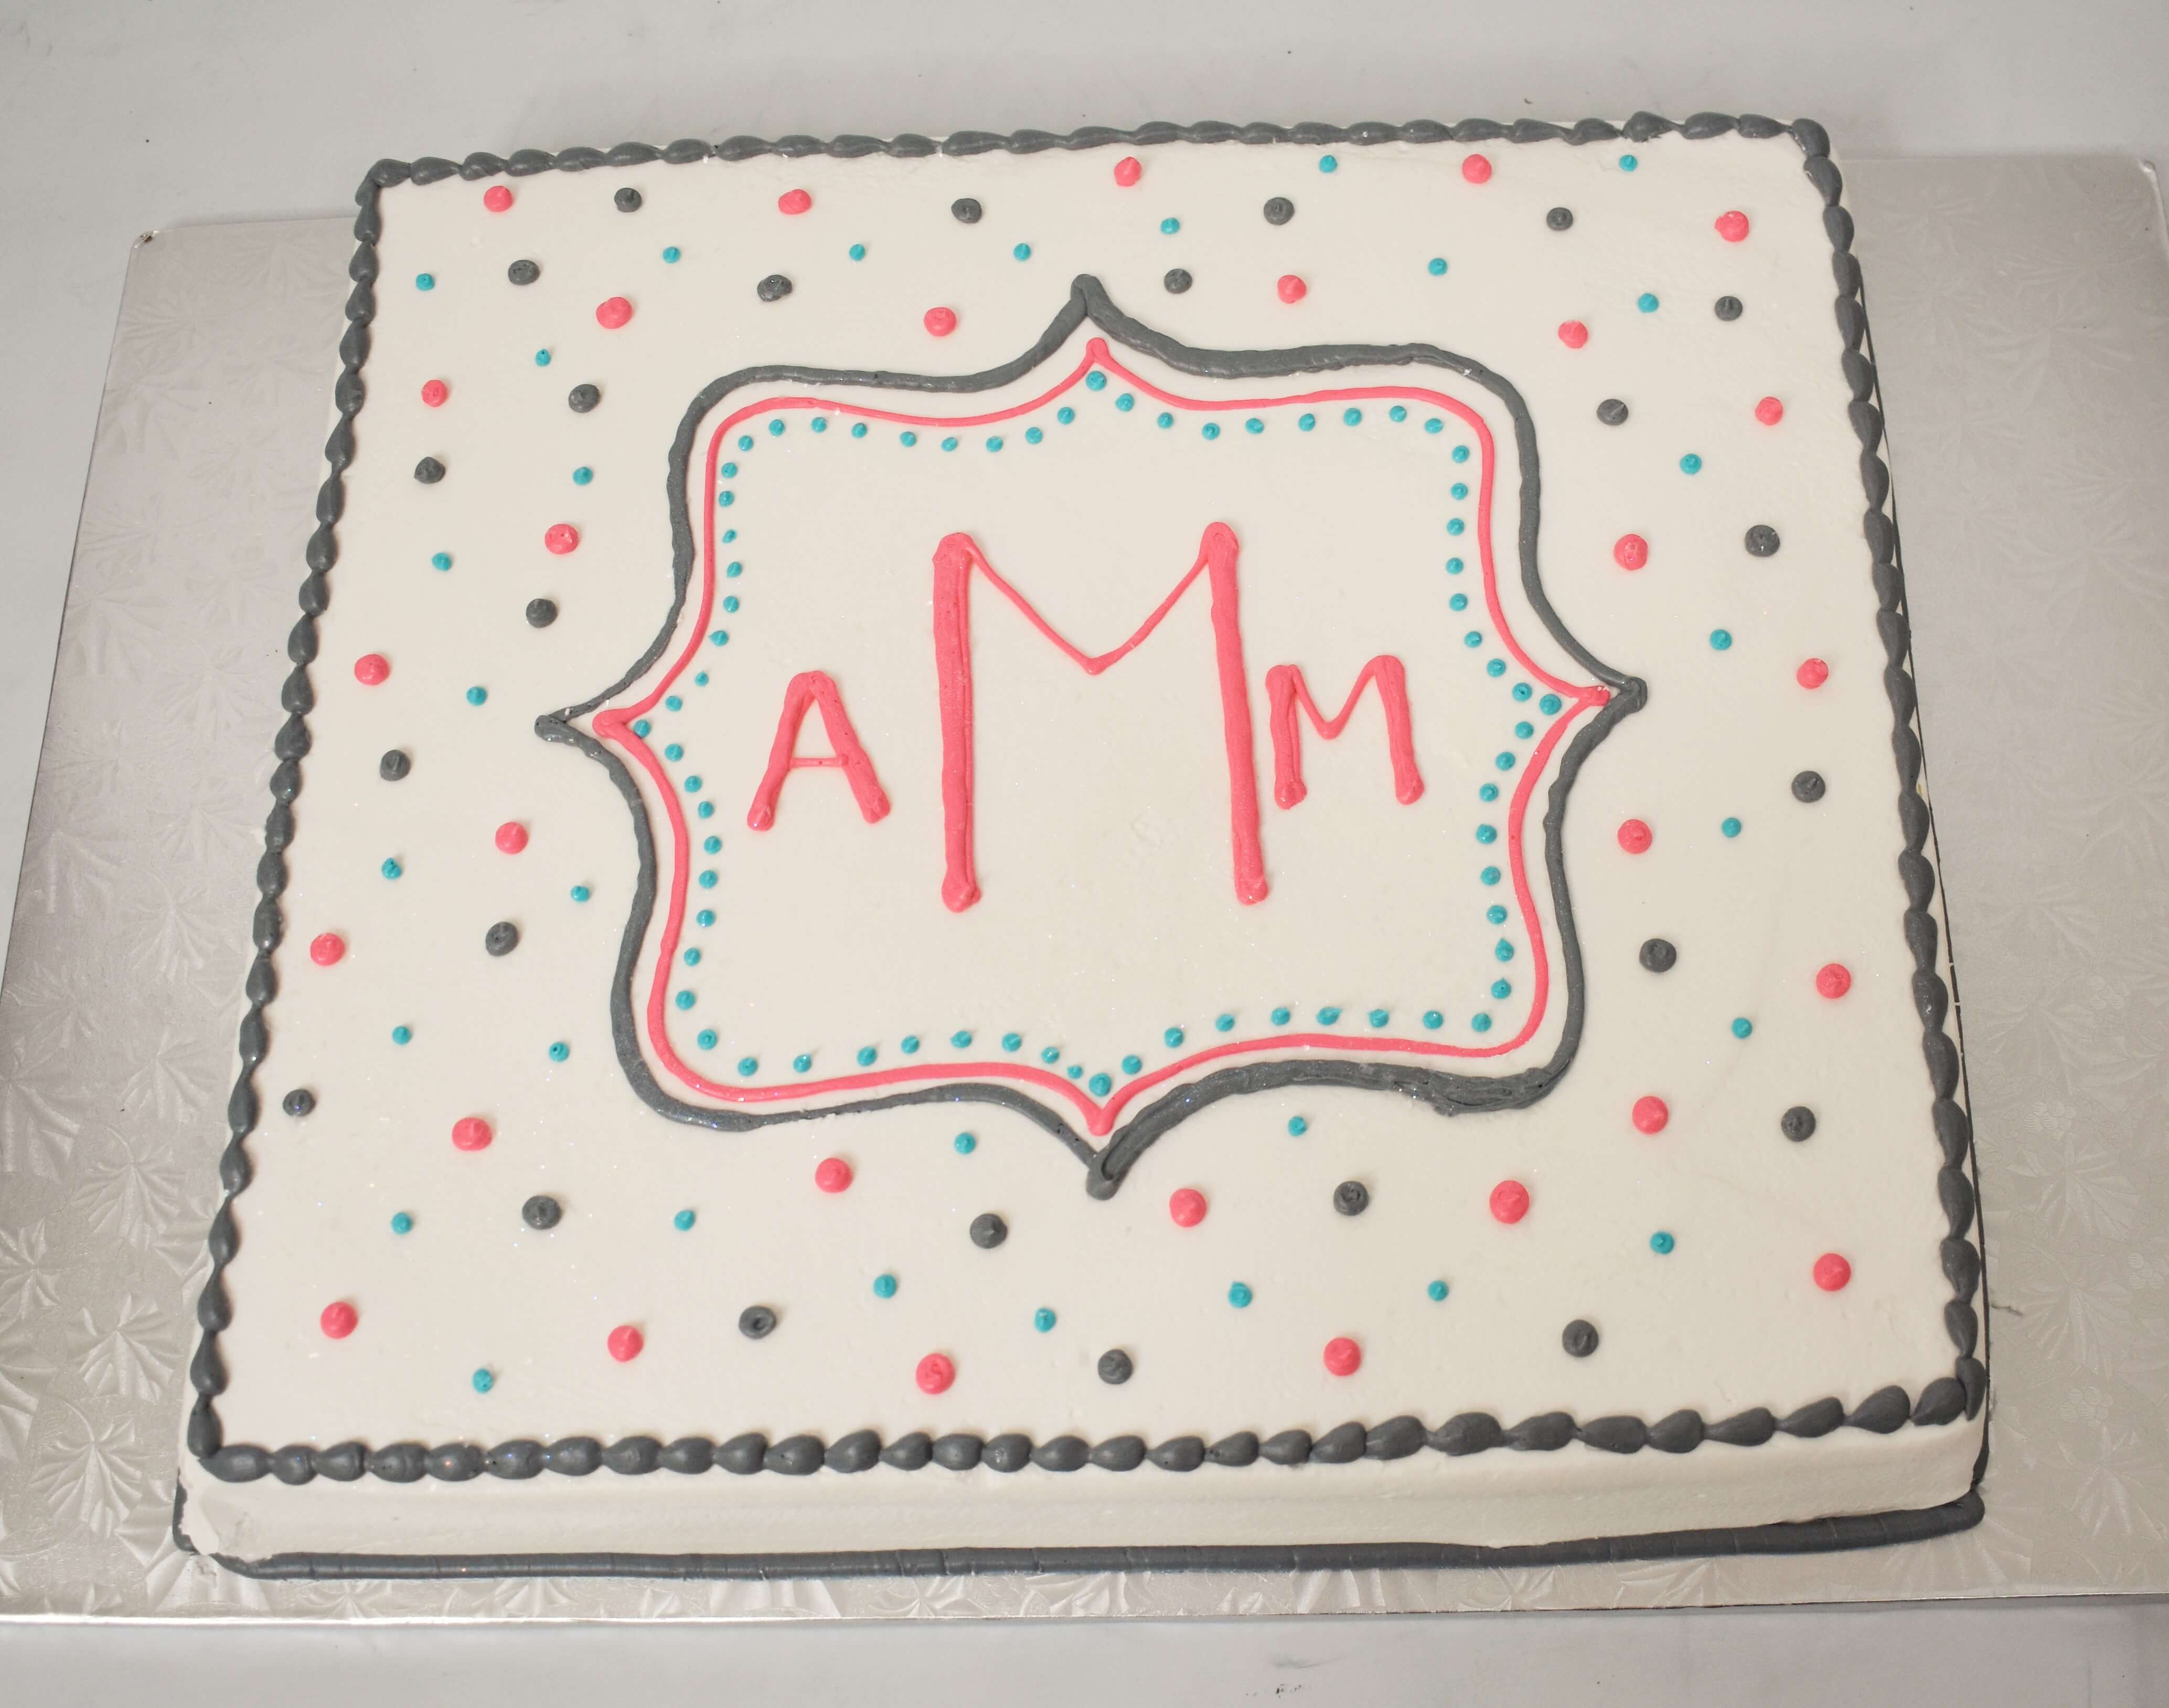 MaArthur's Bakery Custom Cake with Monongram Inside a Plaque and Polka Dots